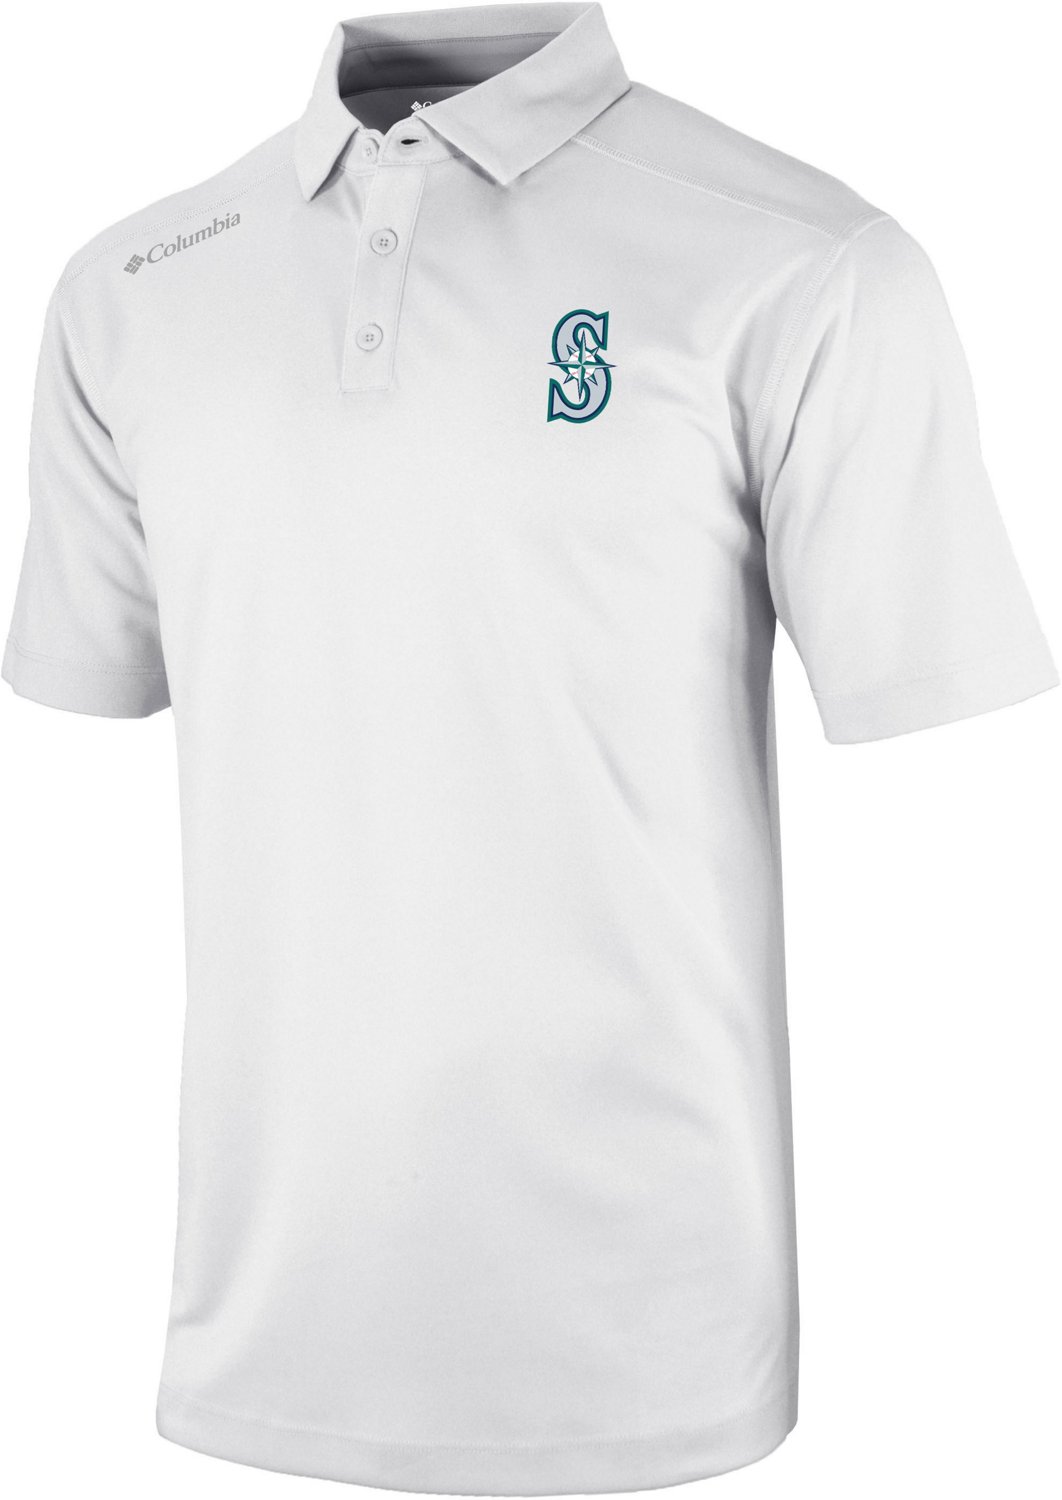 Columbia Sportswear Men's Seattle Mariners Shotgun Polo Shirt